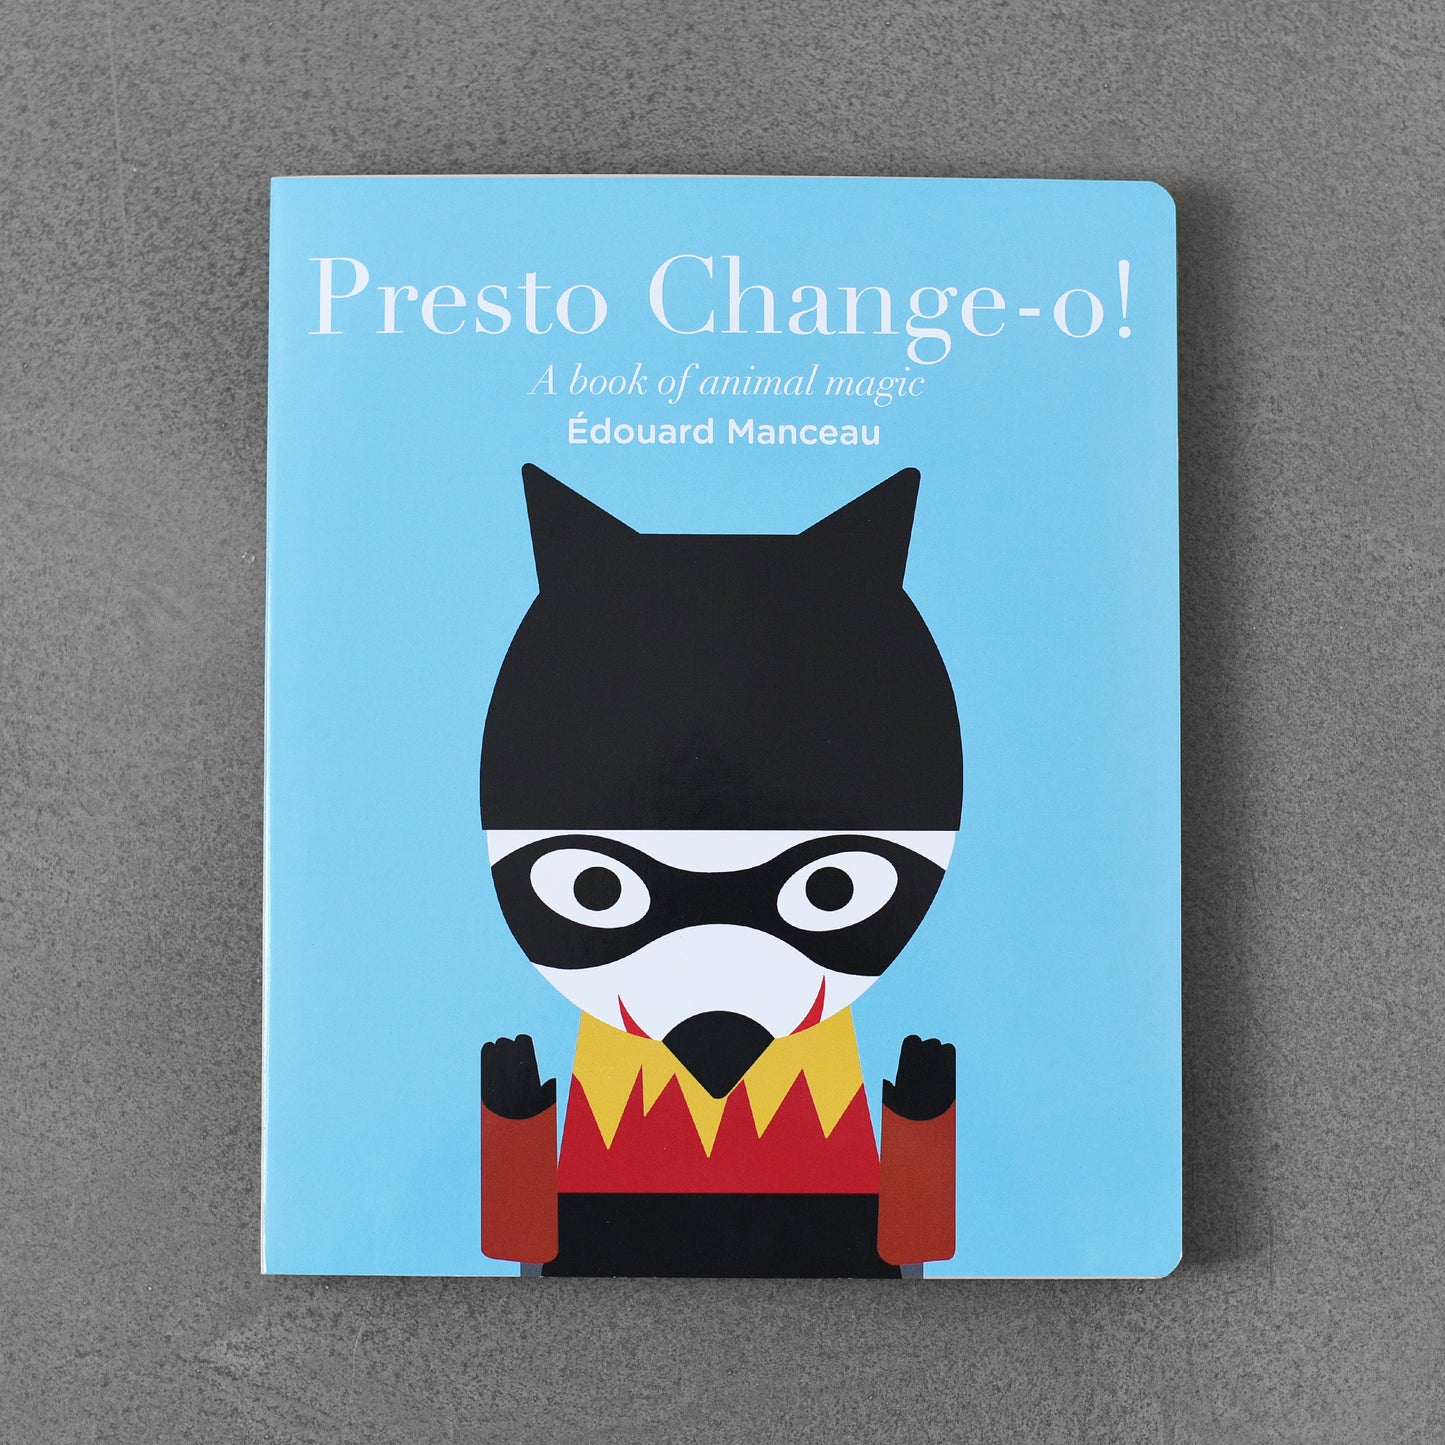 Presto Change-o!: A Book of Animal Magic - Édouard Manceau